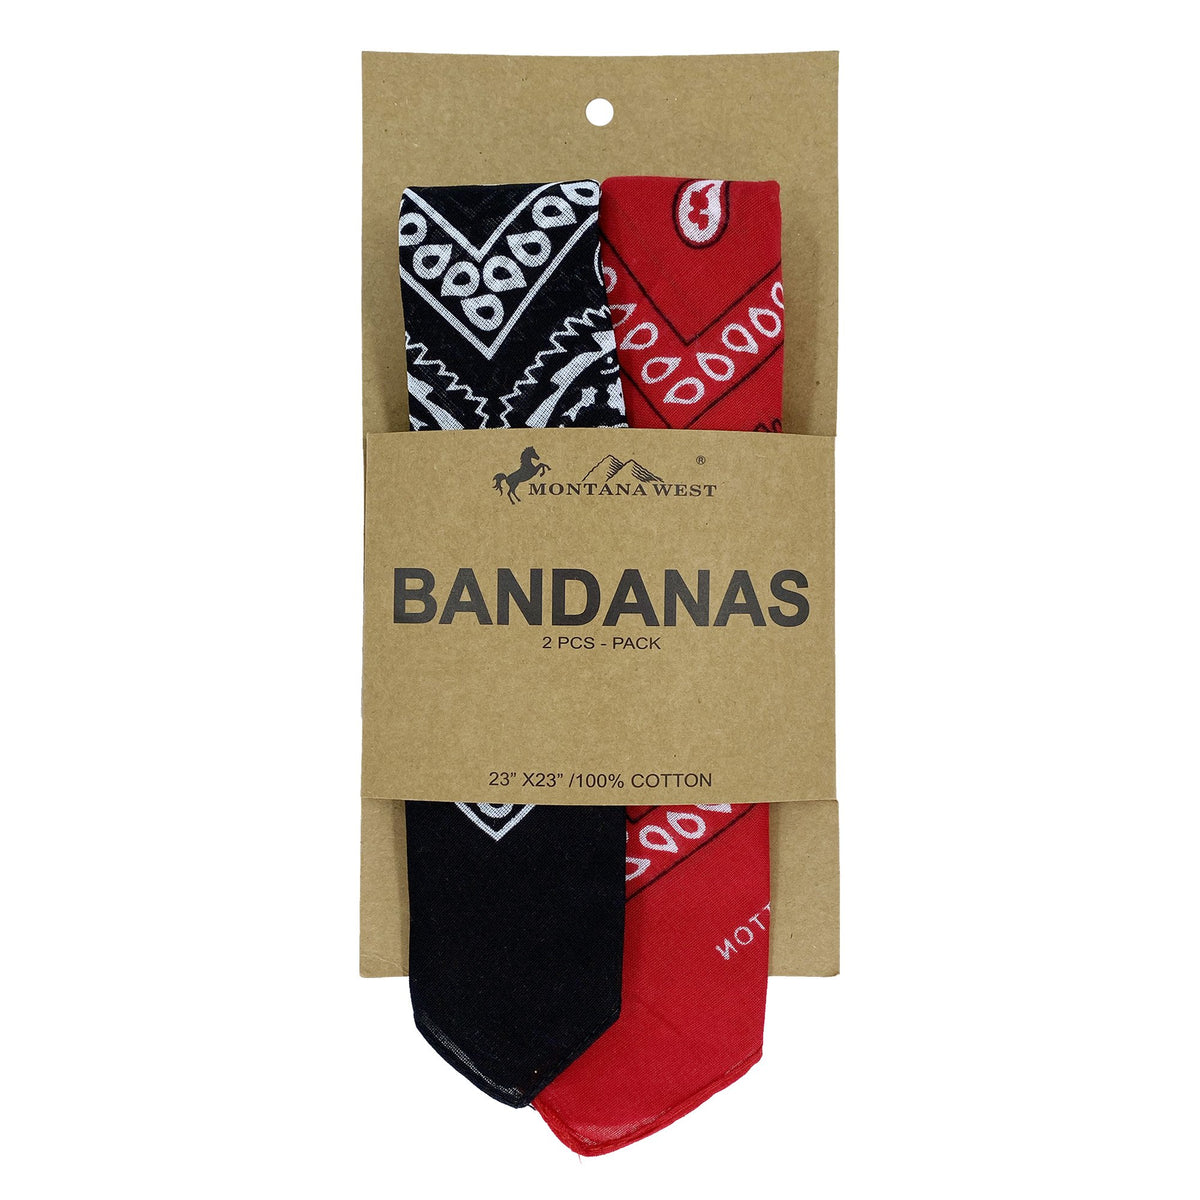 PCS Scarf Scarf Bandana with Headwear- Print Multi-Purpose Red 2 for Bandanas Women Black Men, Western & Headband